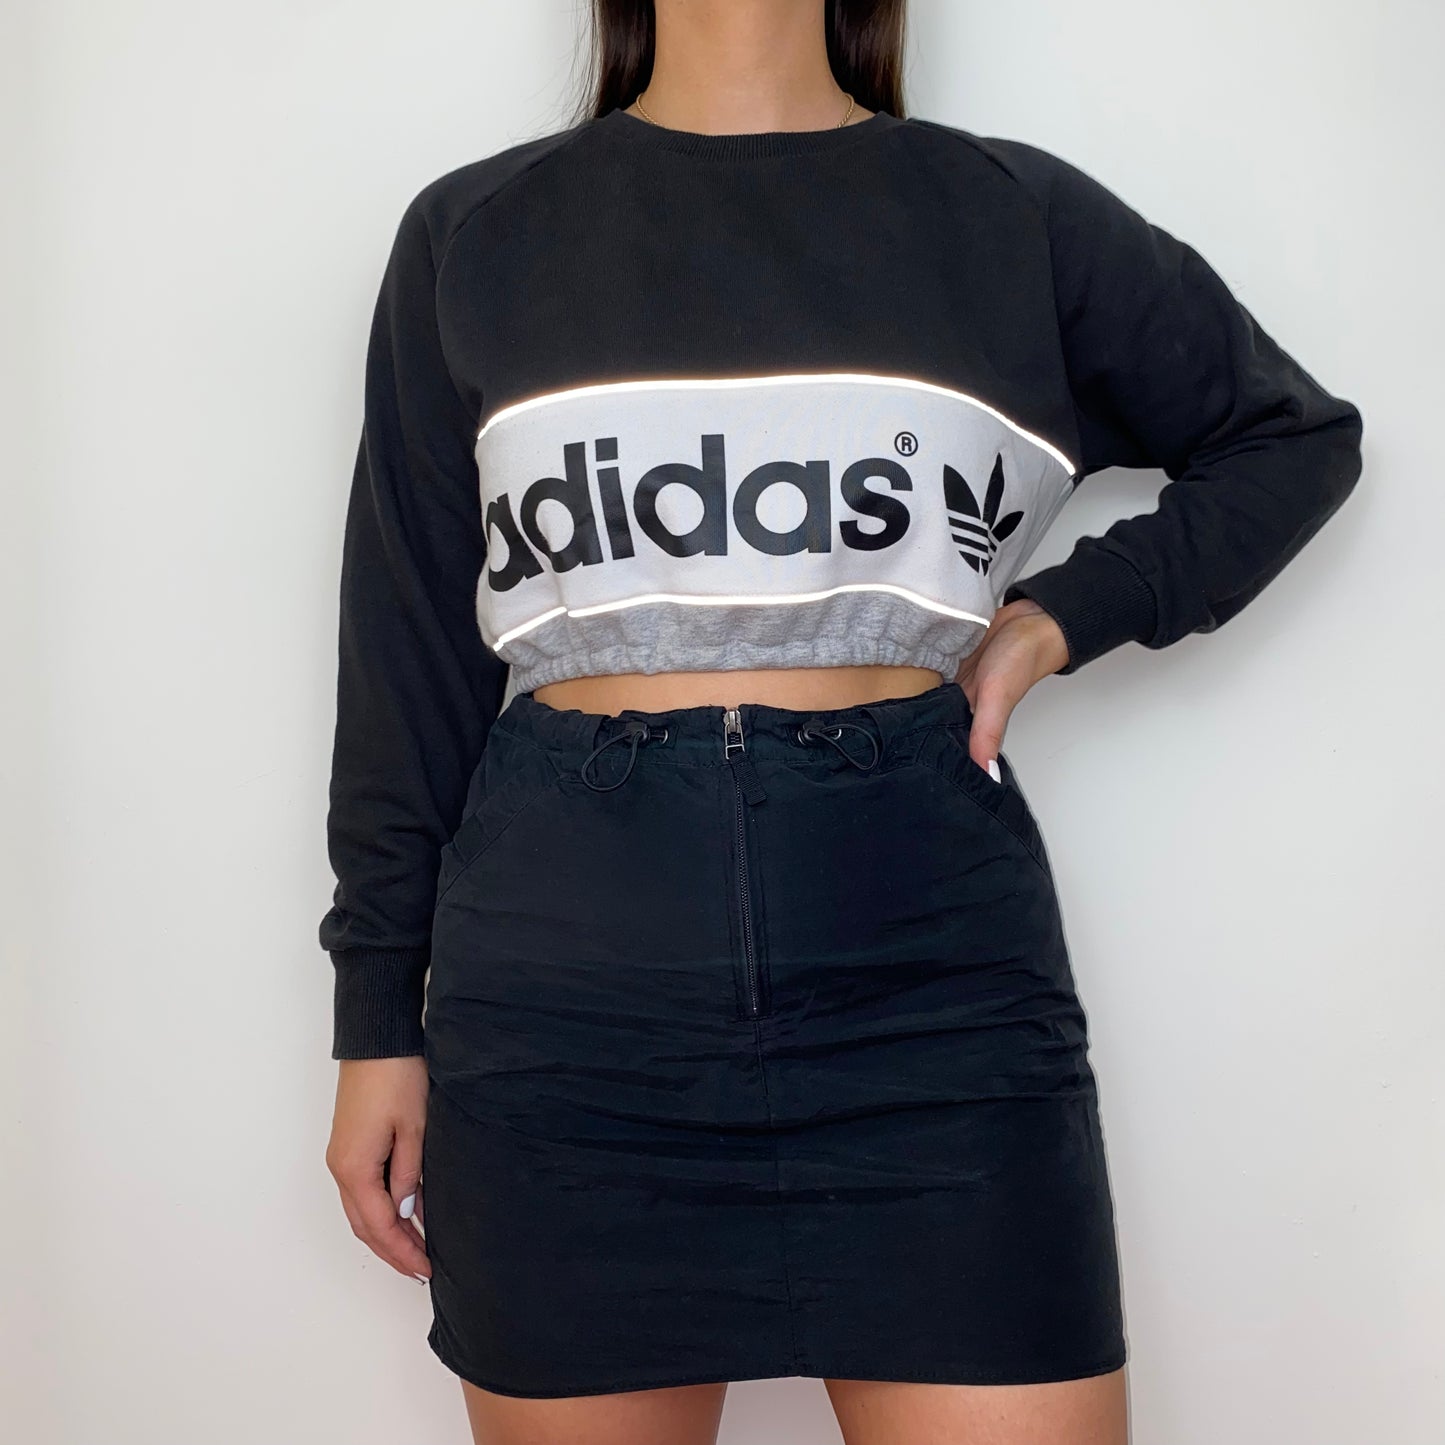 Adidas Black Cropped Sweatshirt